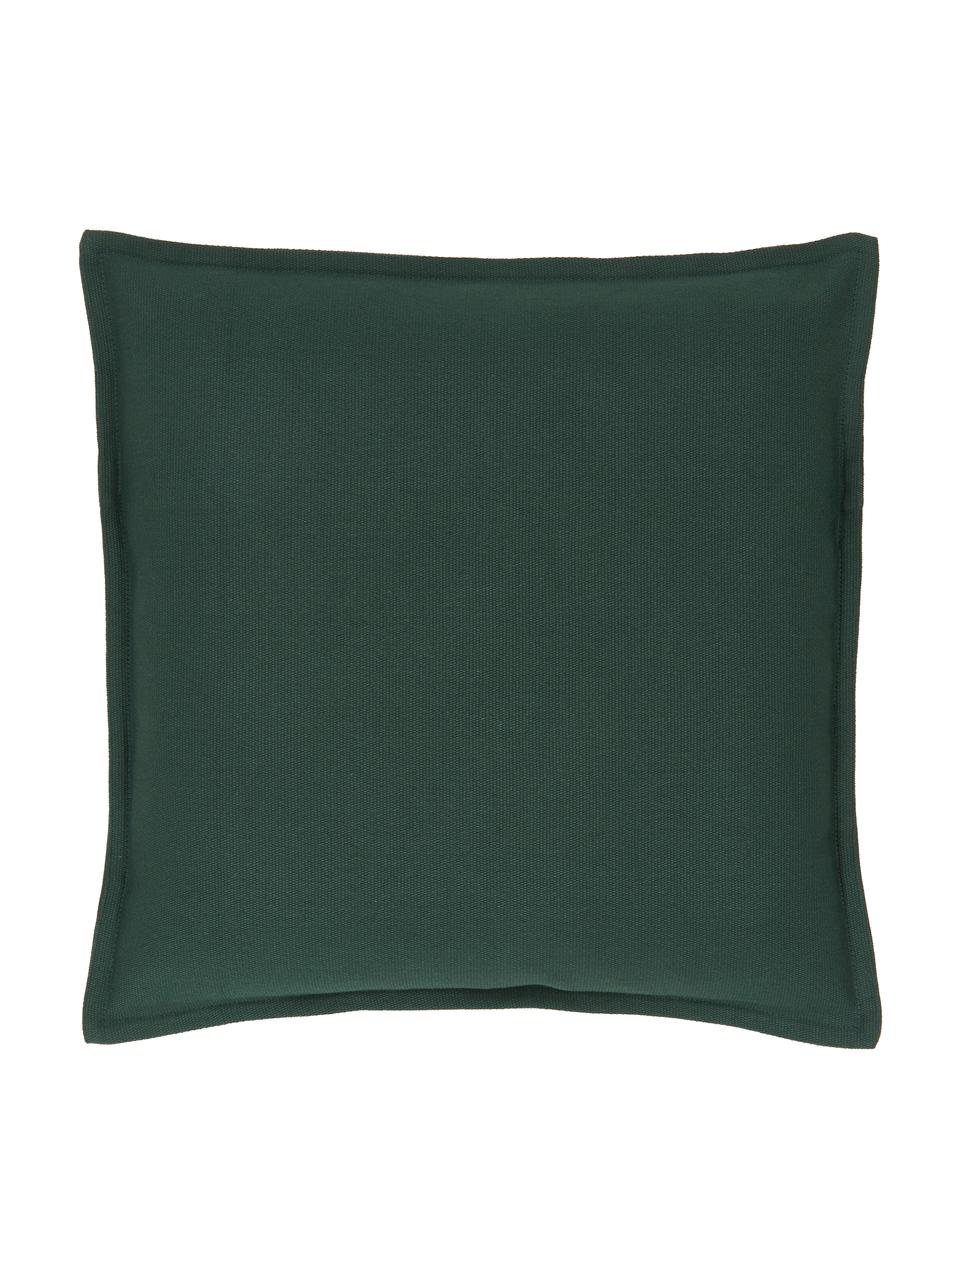 Federa arredo in cotone verde scuro Mads, 100% cotone, Verde, Larg. 40 x Lung. 40 cm